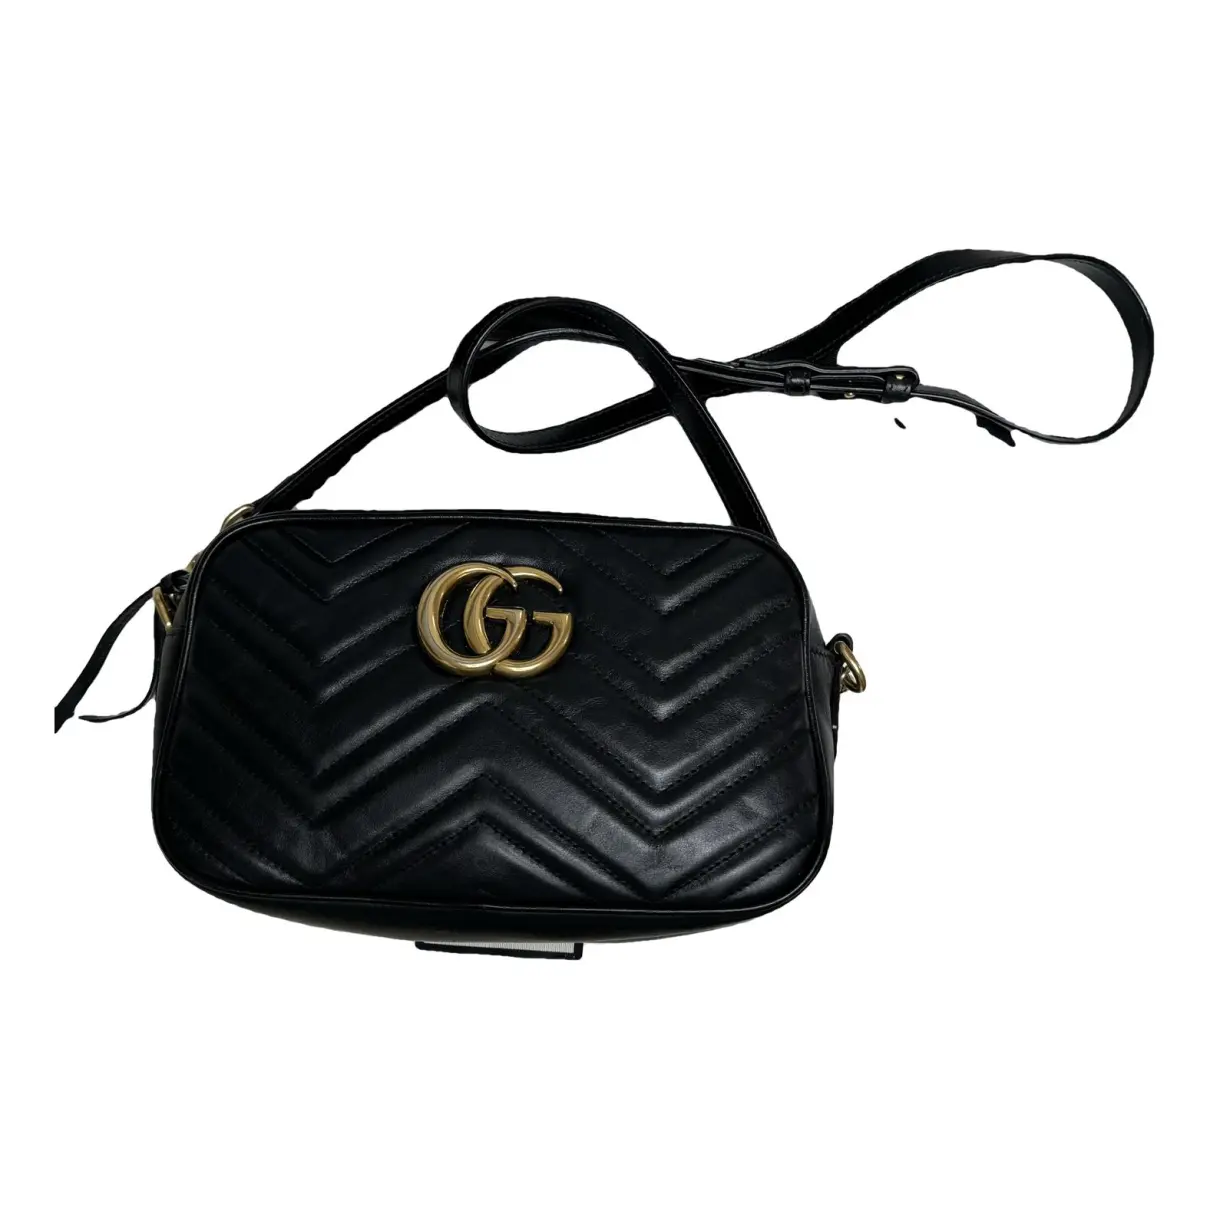 GG Marmont leather crossbody bag